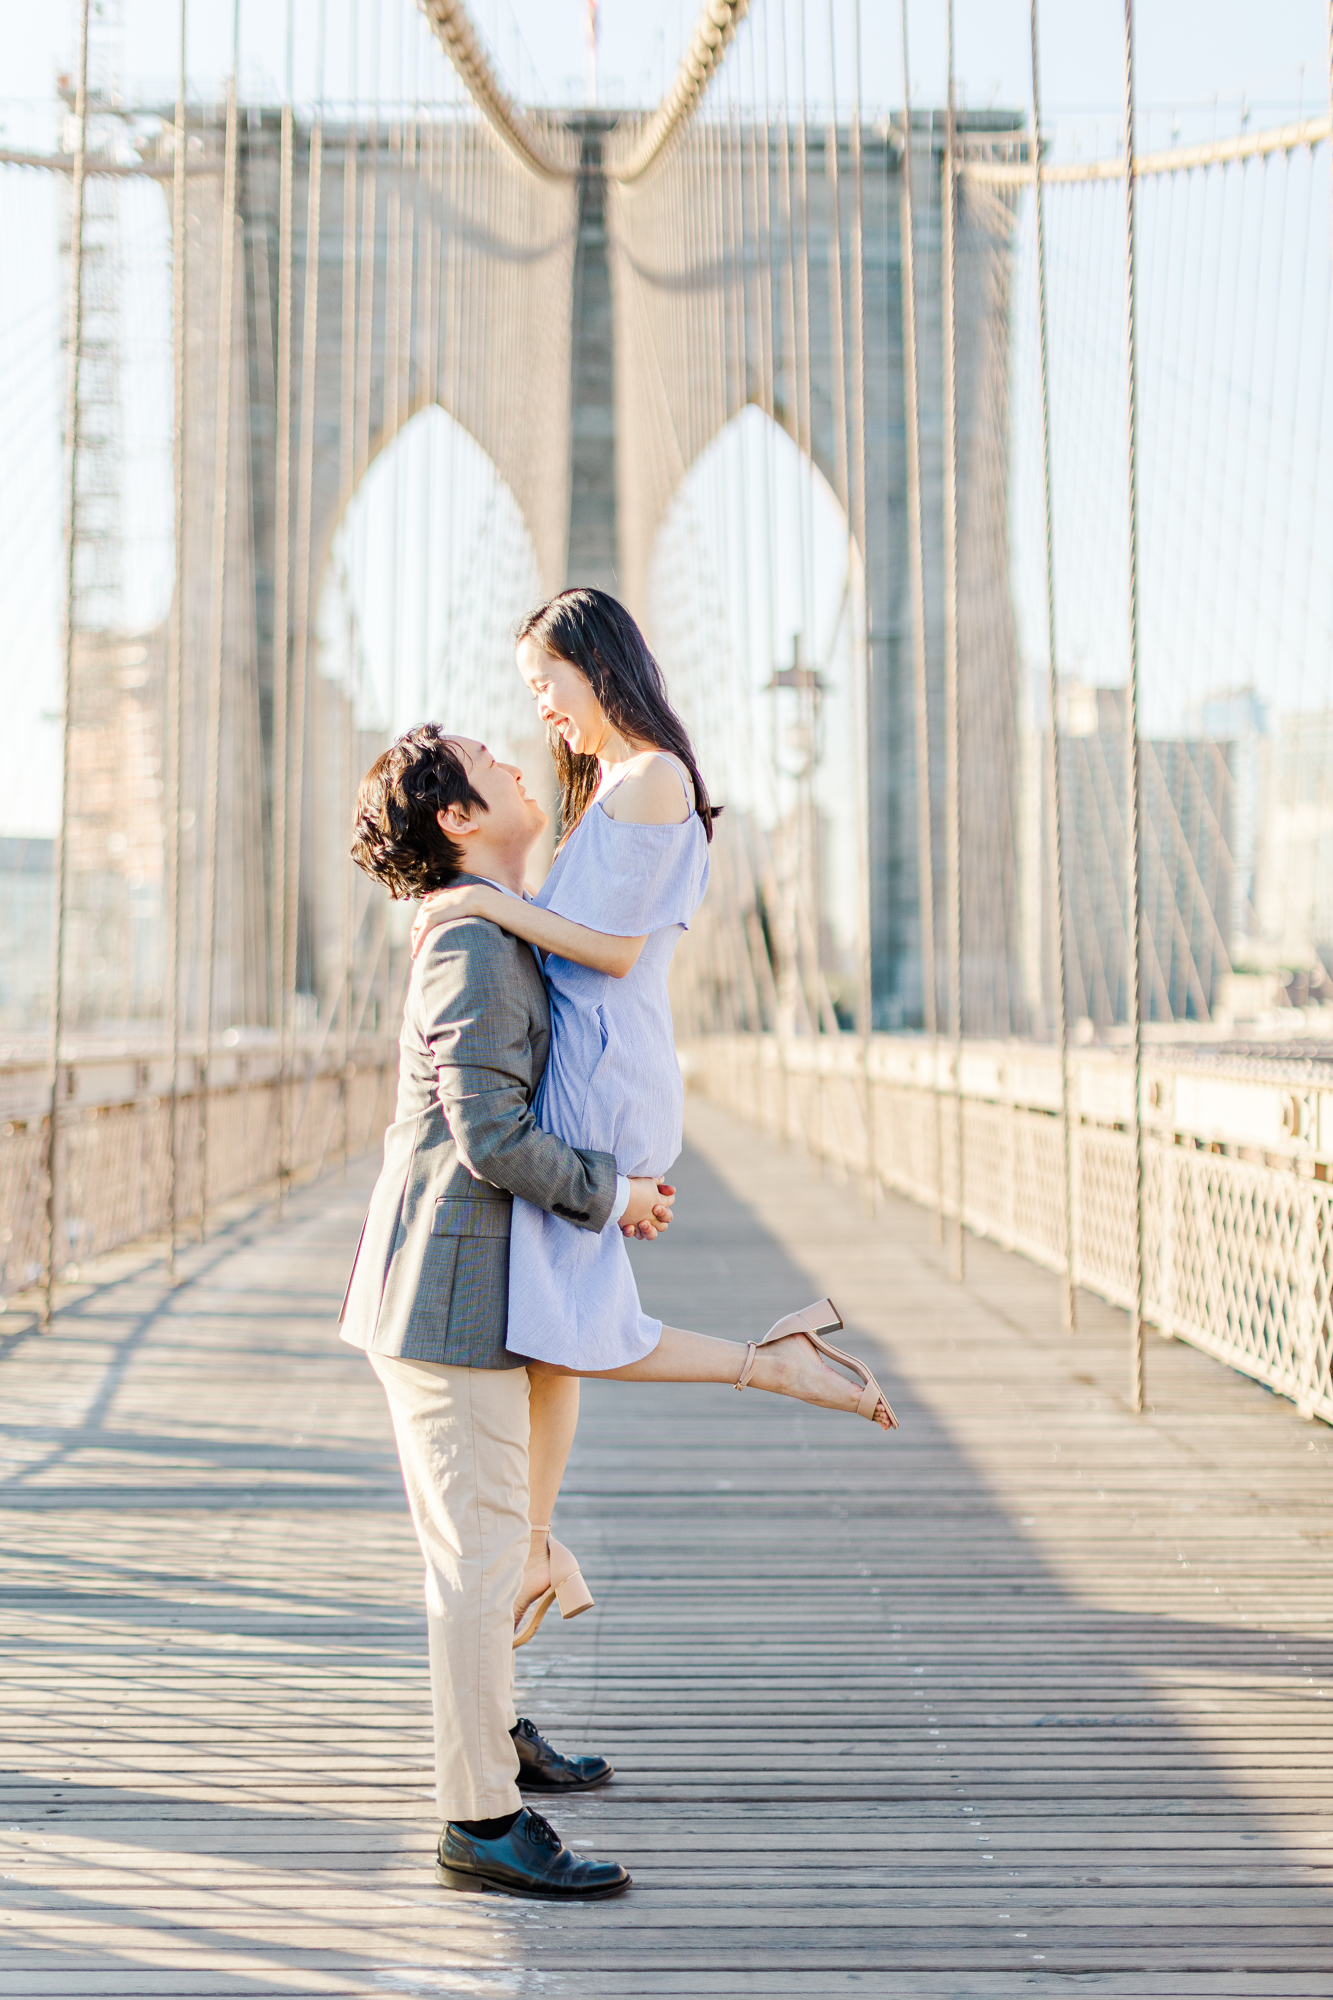 Timeless New York Engagement Photos on the Brooklyn Bridge